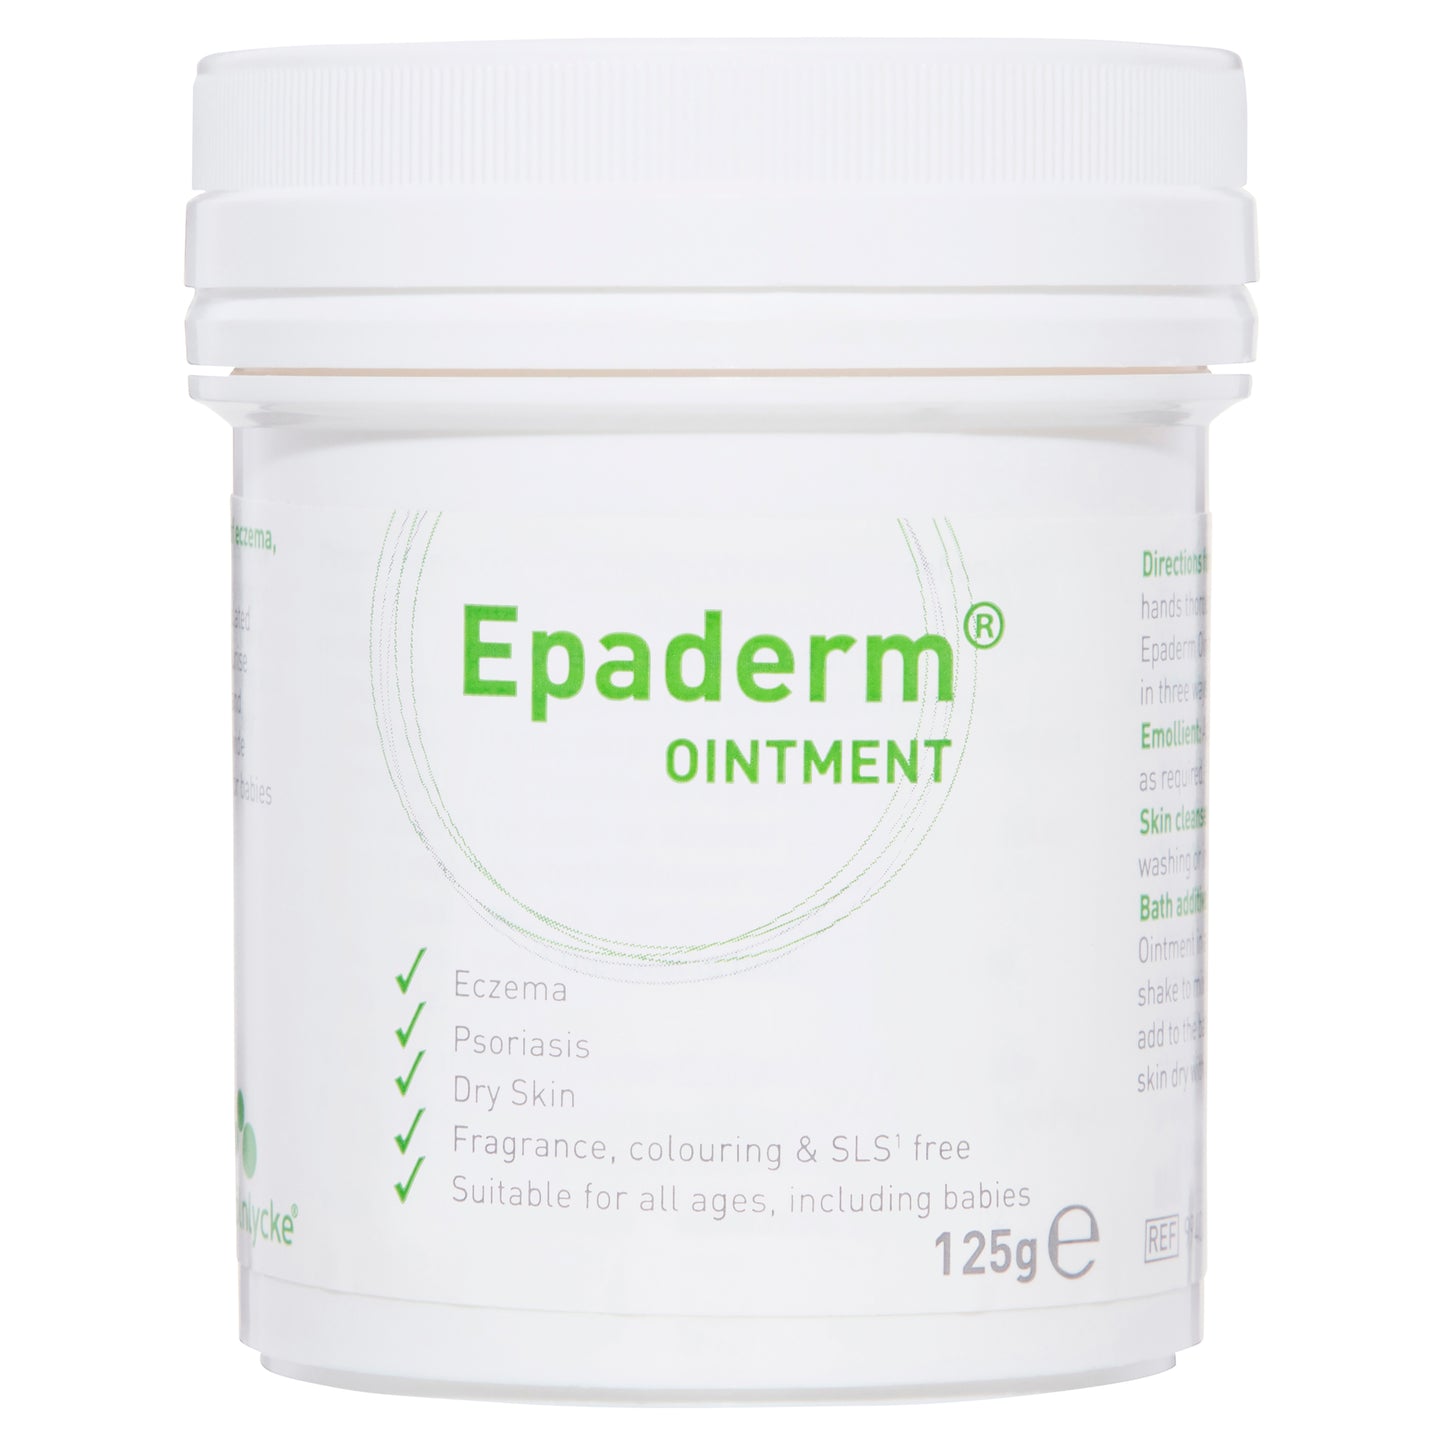 Epaderm® Ointment